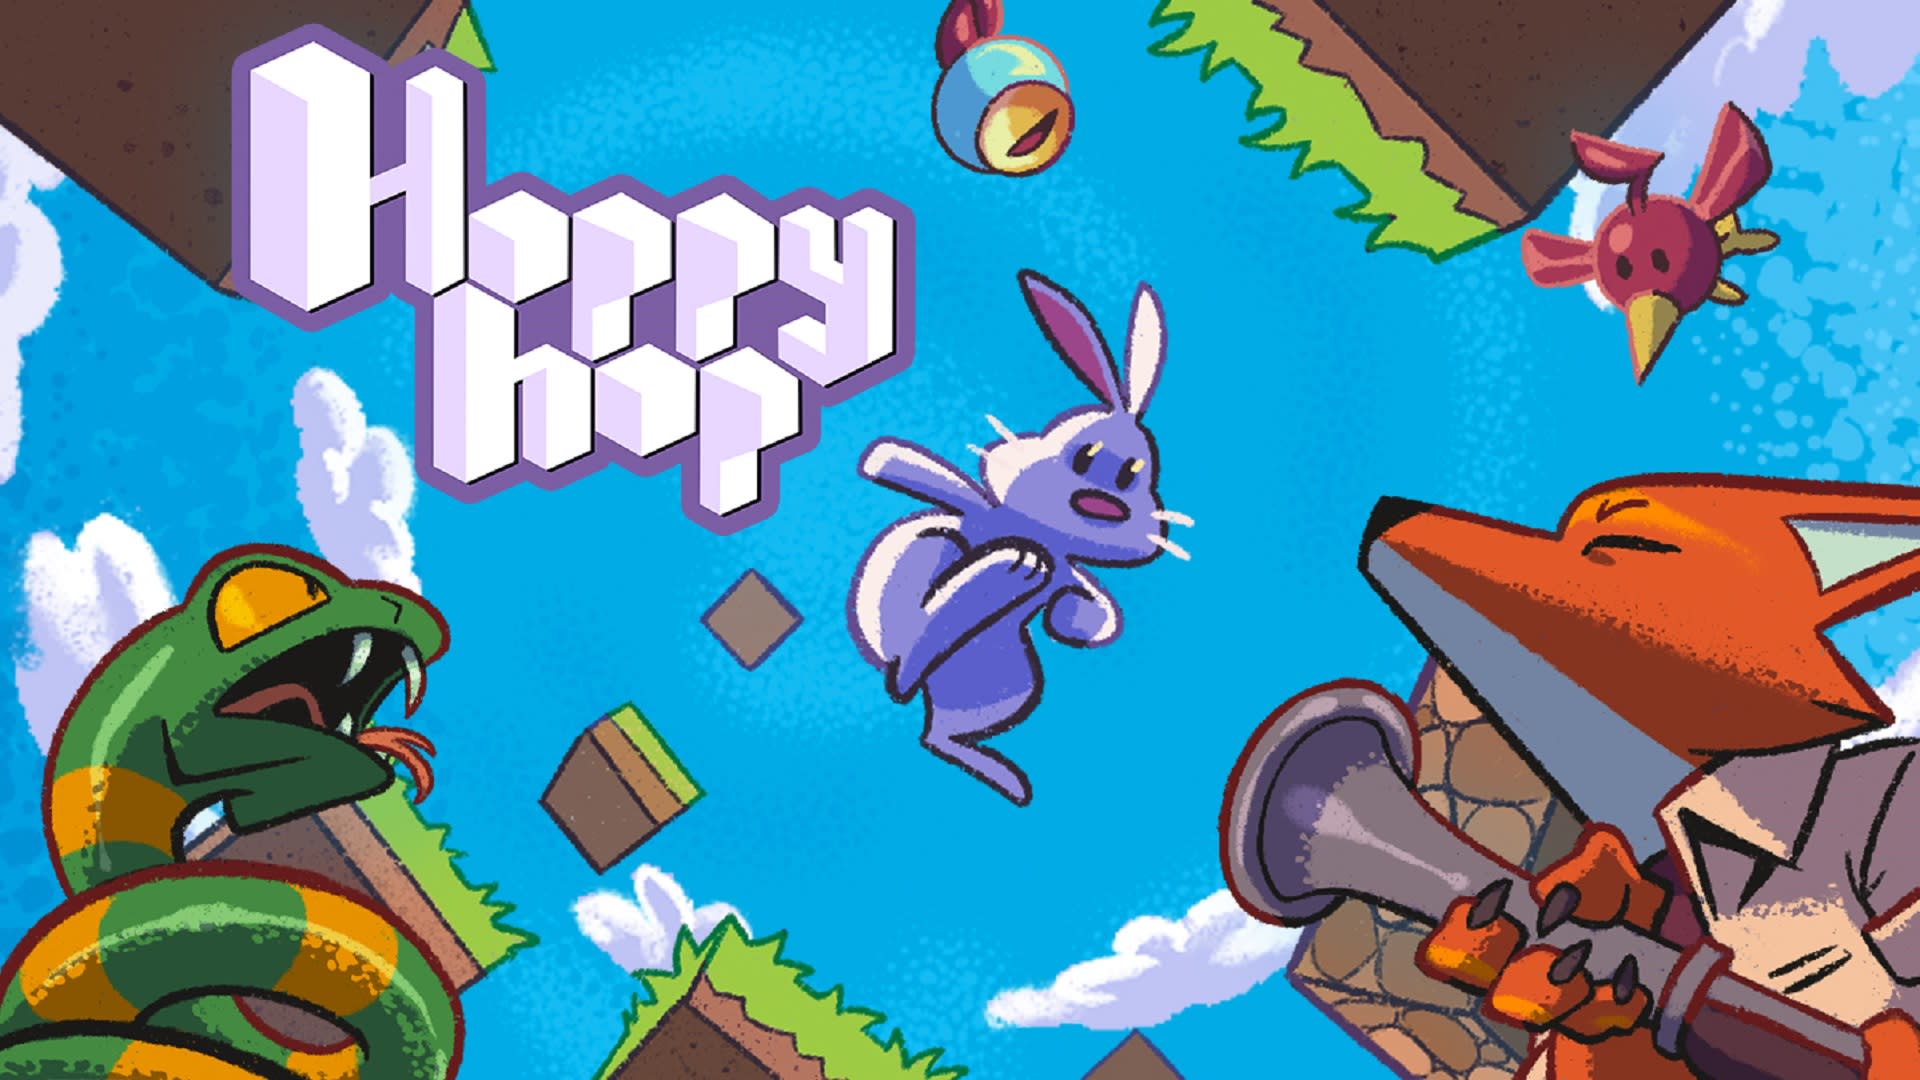 Hoppy Hop